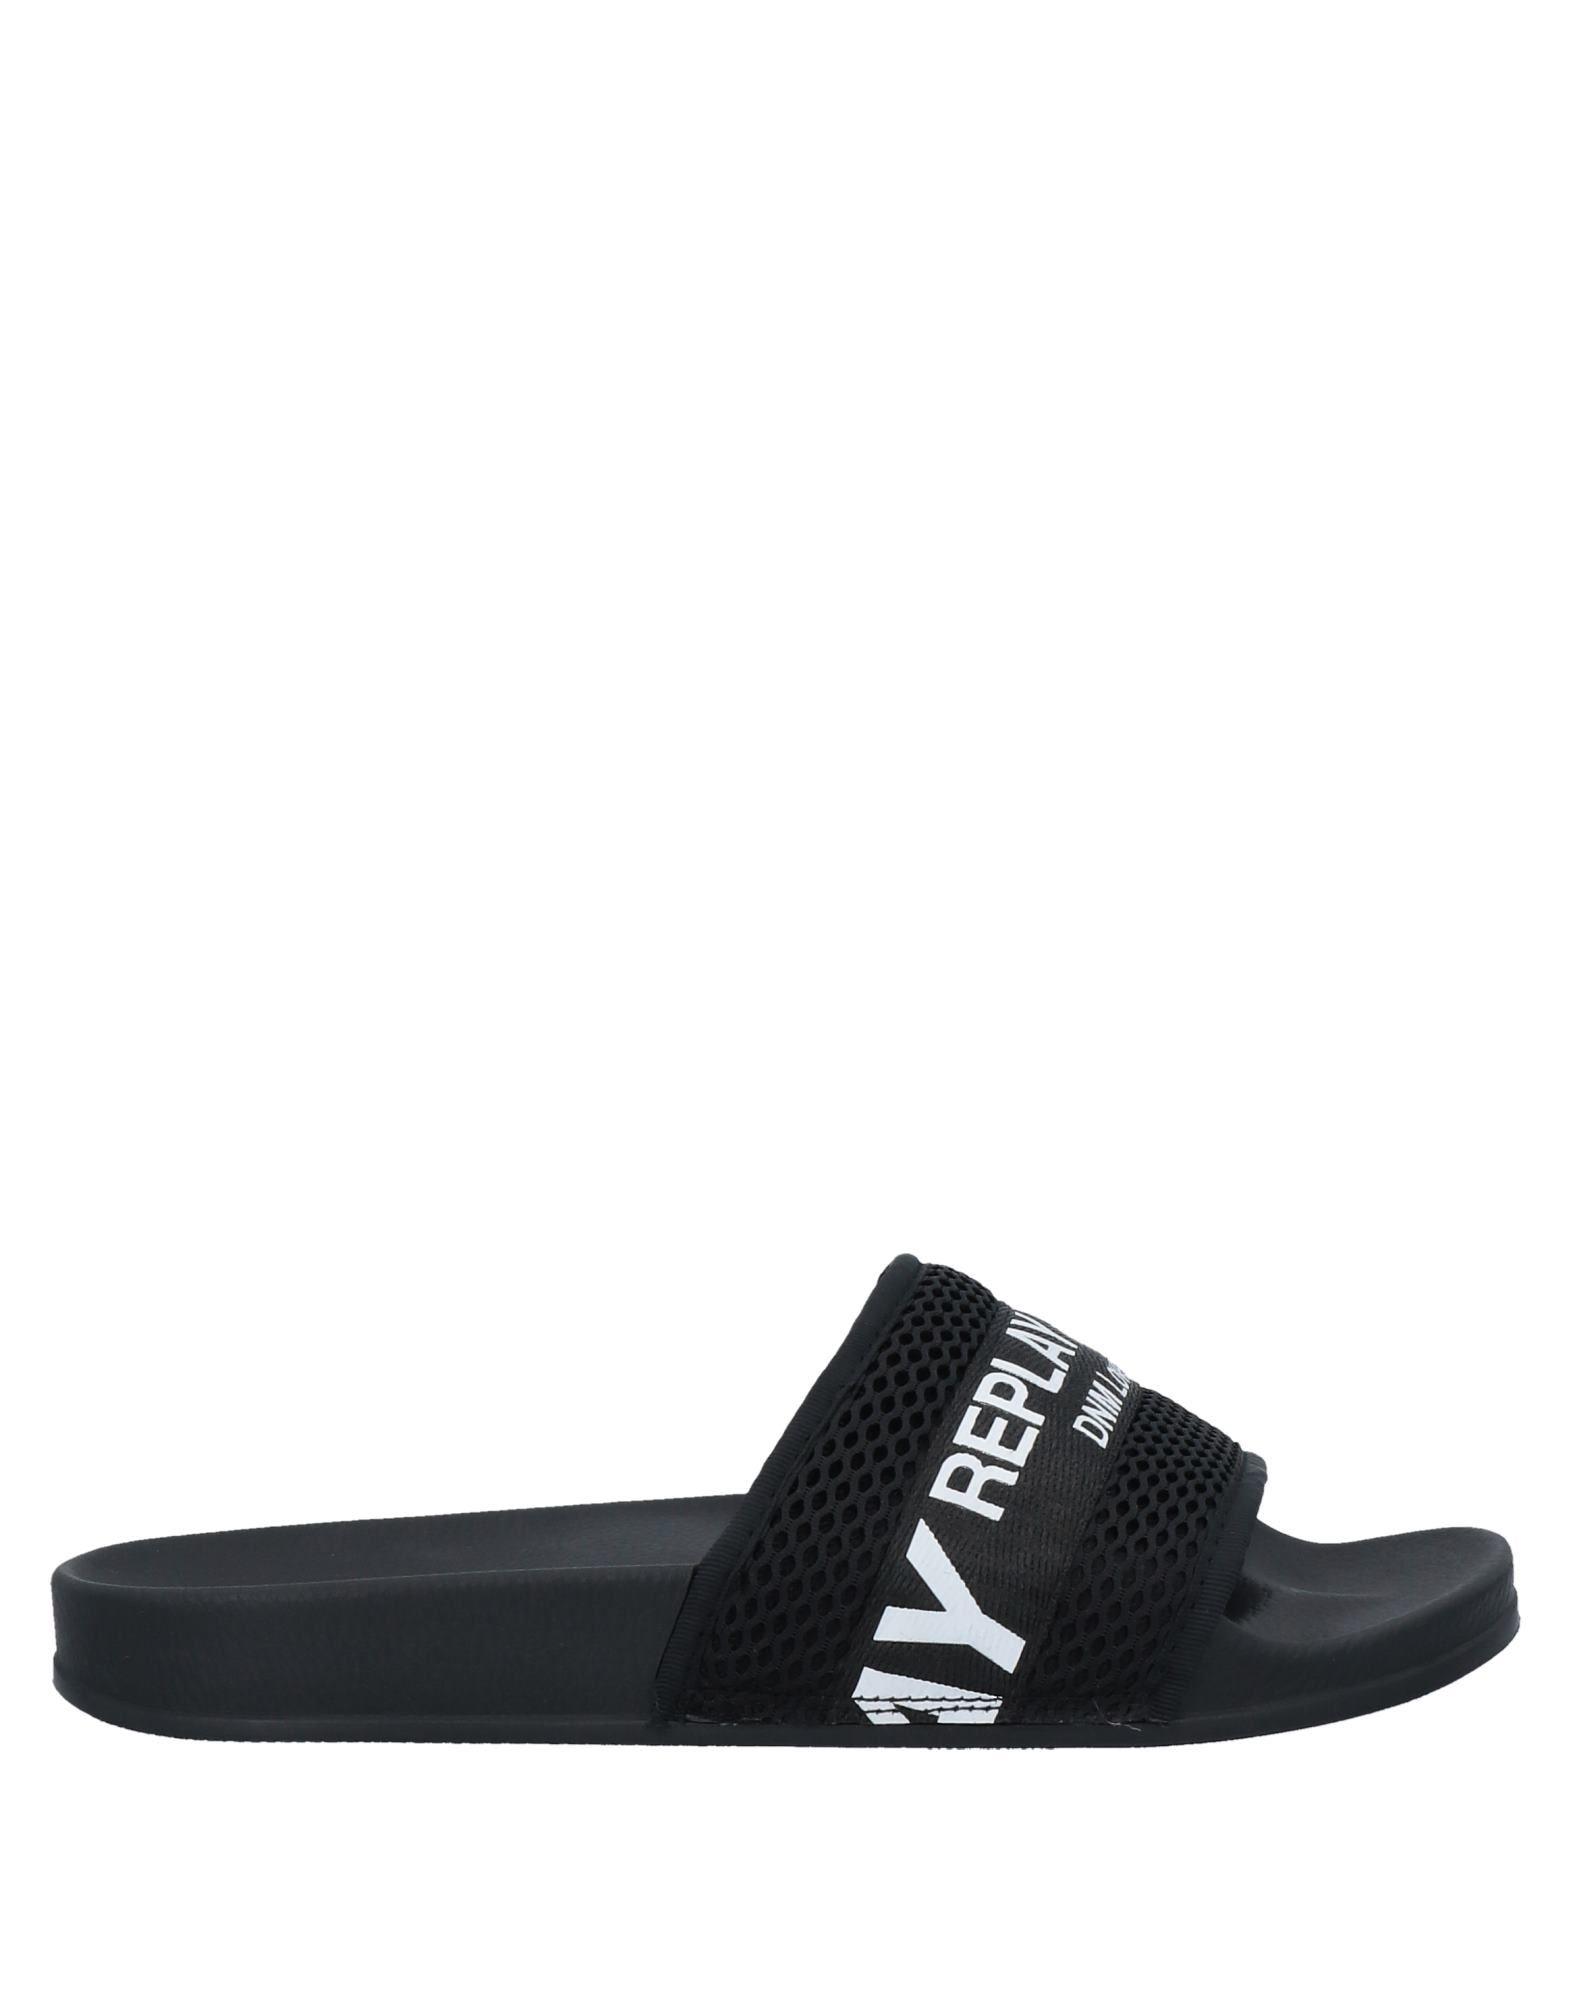 Replay Neoprene Sandals in Black for Men - Lyst